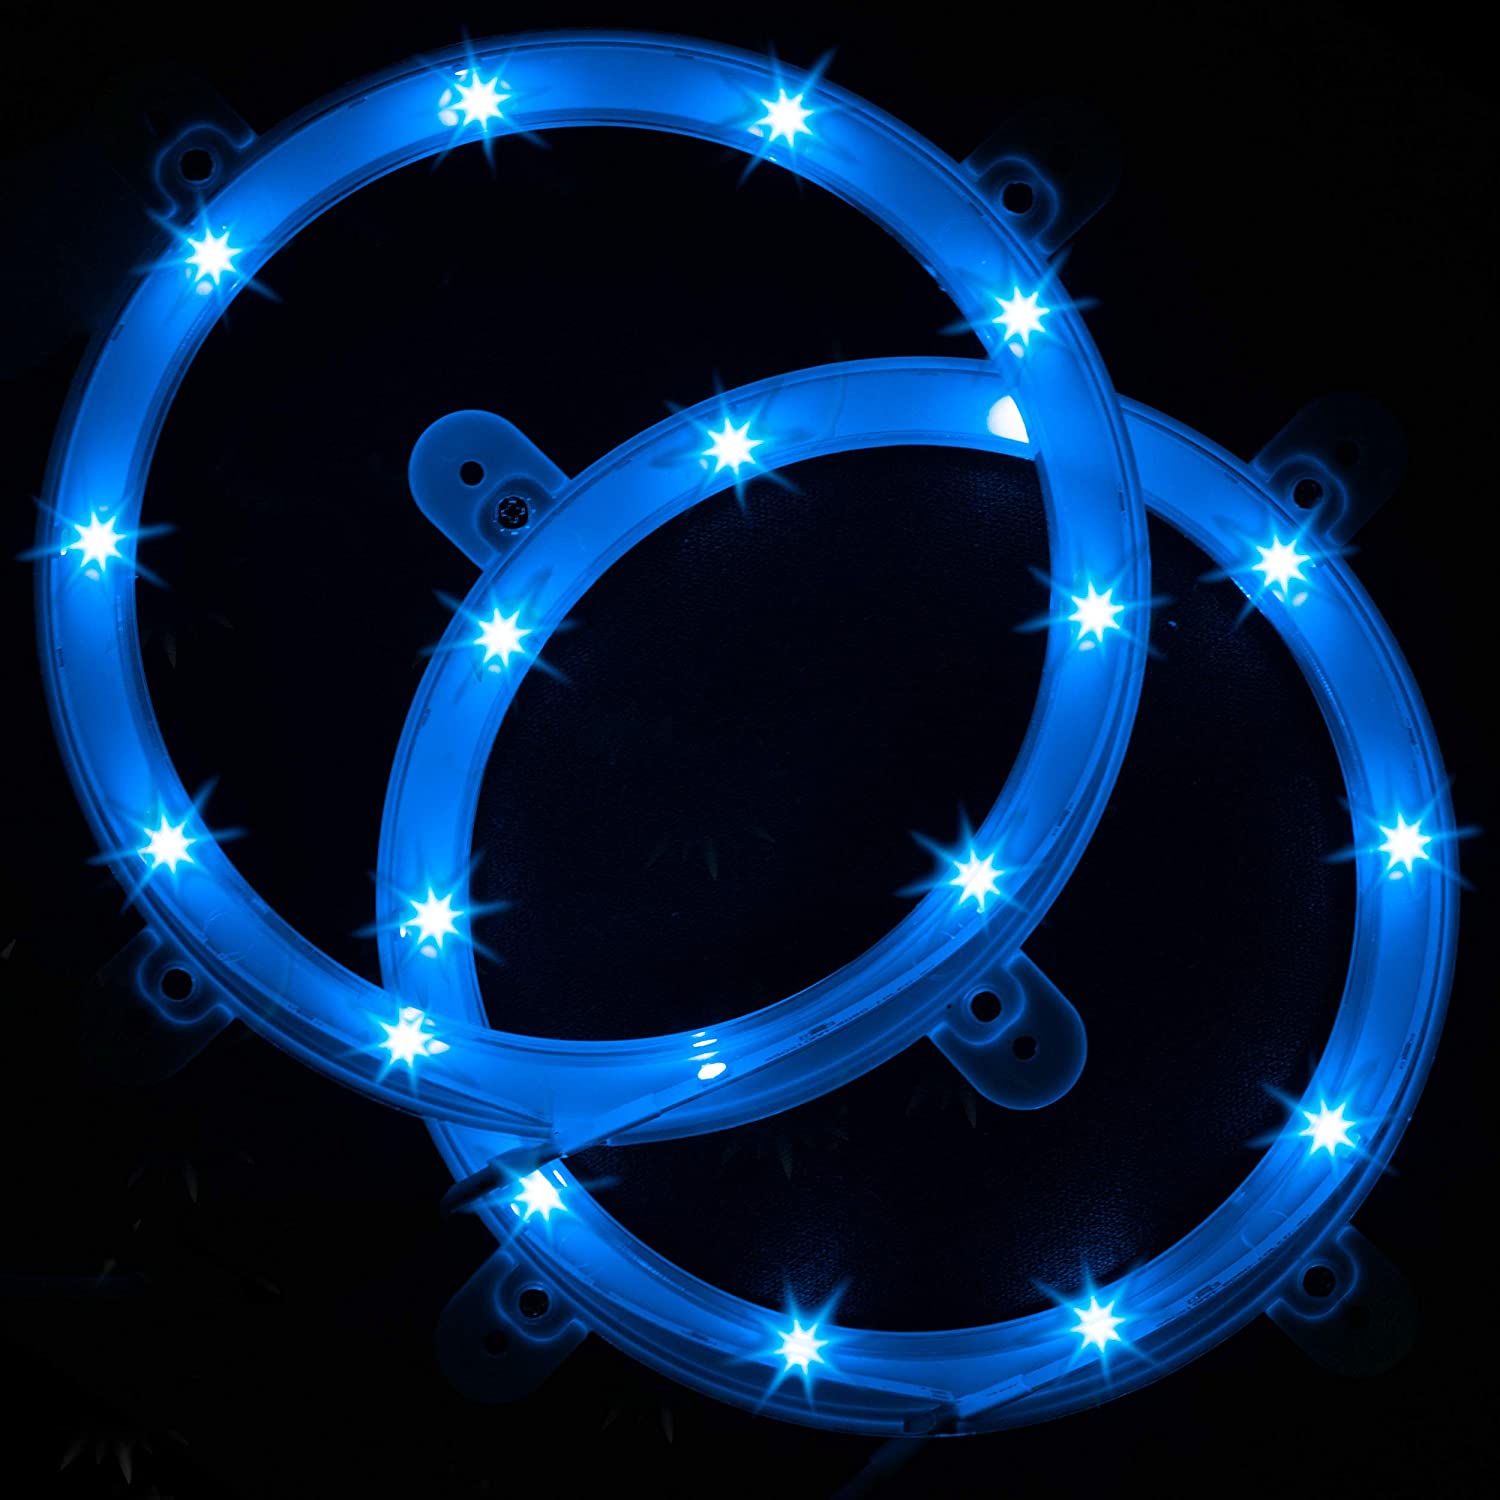 Barcaloo Cornhole Board Lights - Blue LED Corn Hole Lighting Kit for Playing at Night